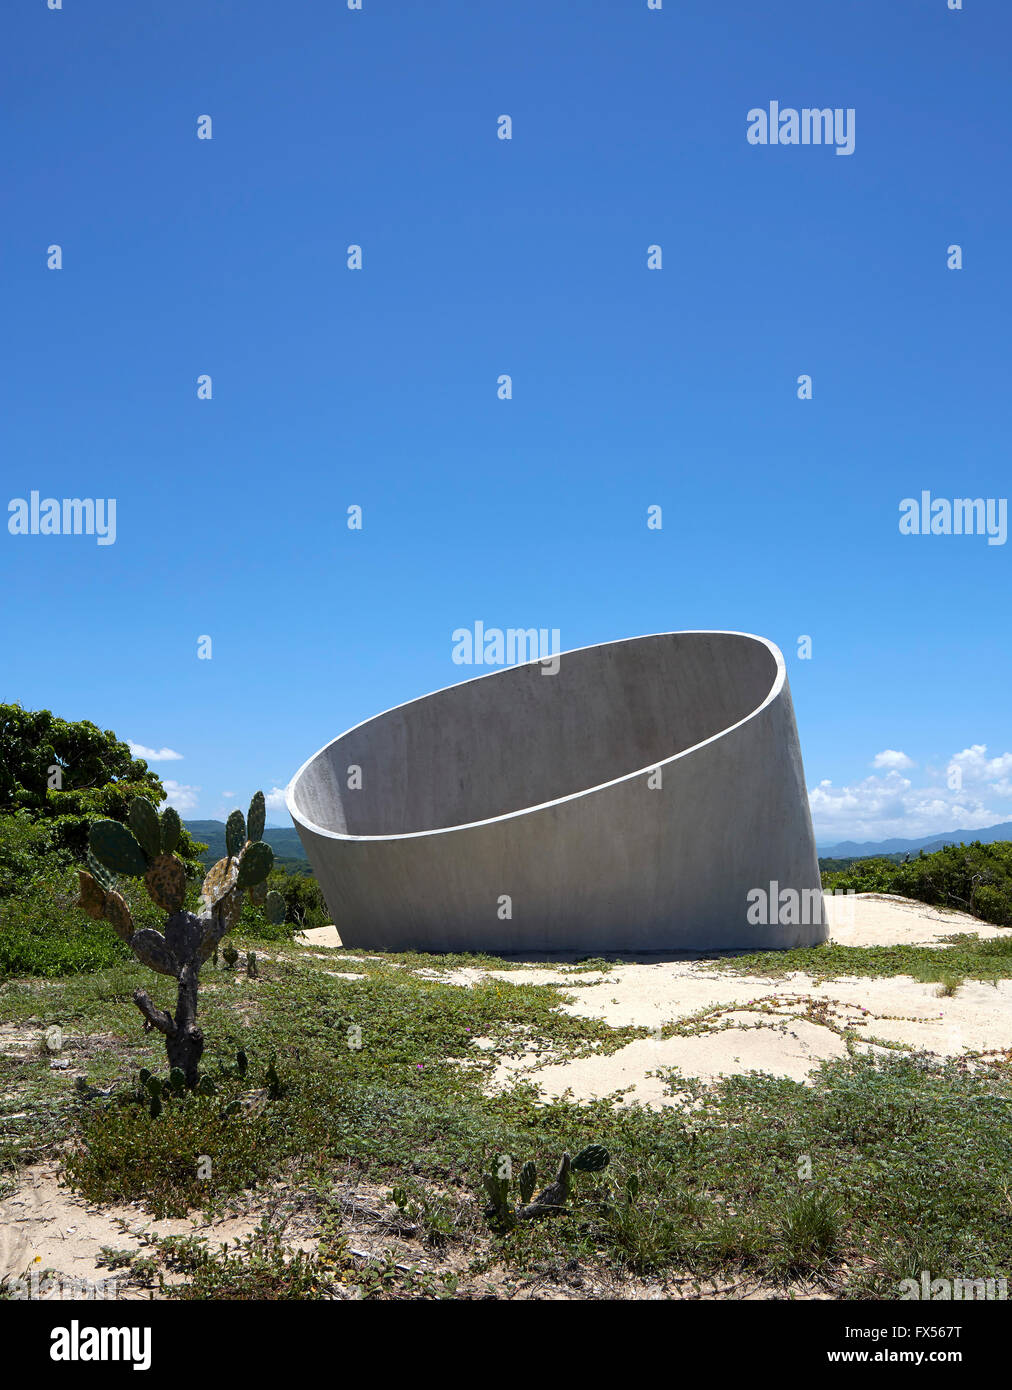 Ando sculpture. Casa Wabi, Puerto Escondido, Mexico. Architect: Tadao Ando, 2015. Stock Photo